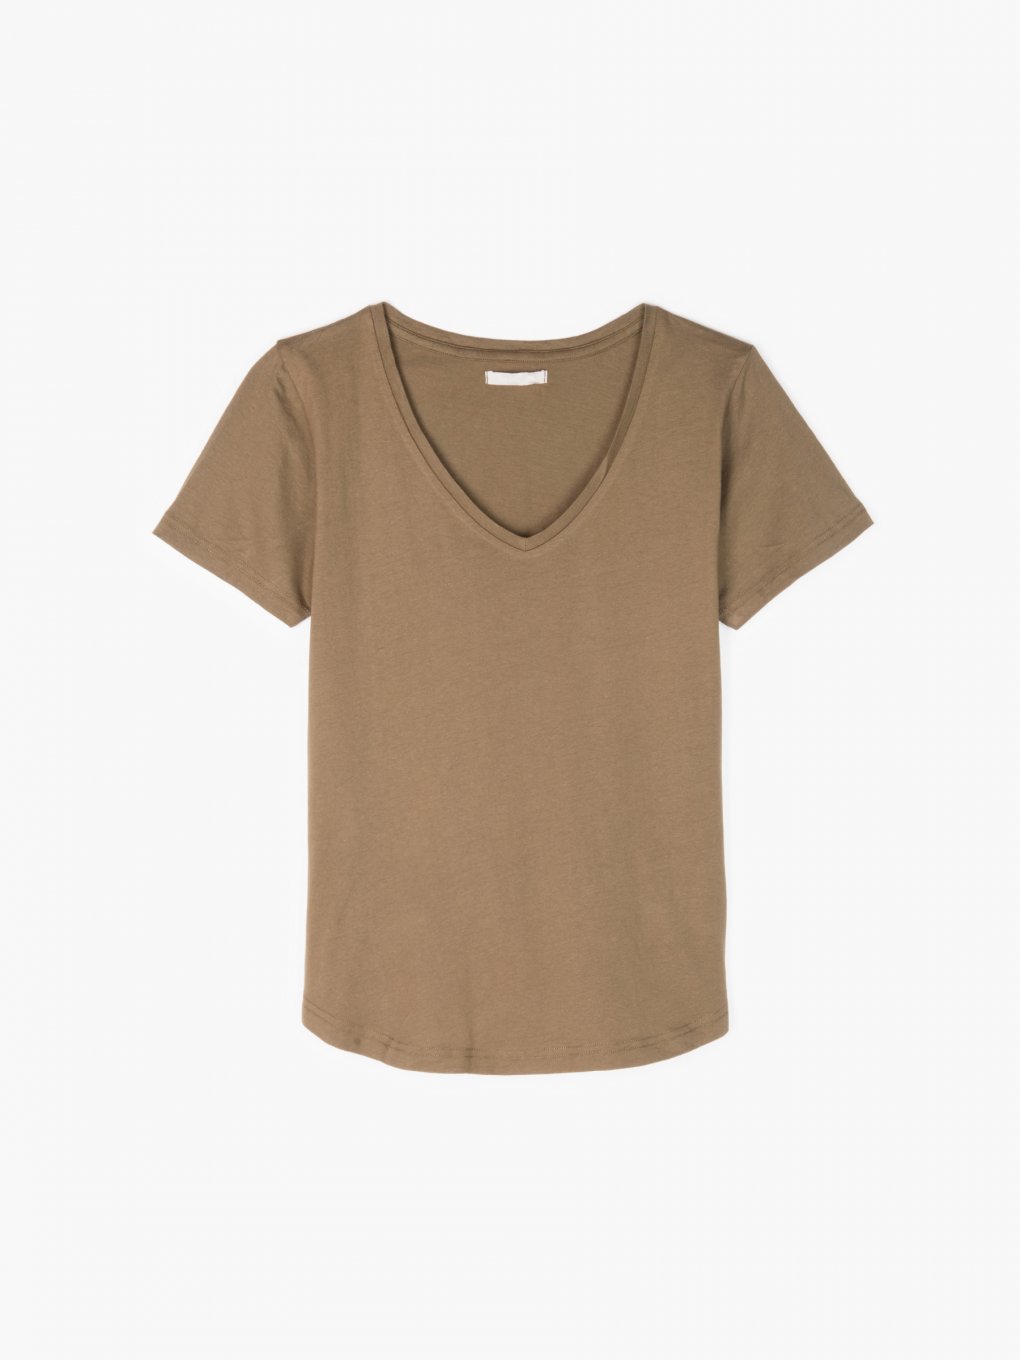 WOMEN FASHION Shirts & T-shirts Lace openwork Pull&Bear blouse discount 81% Brown M 